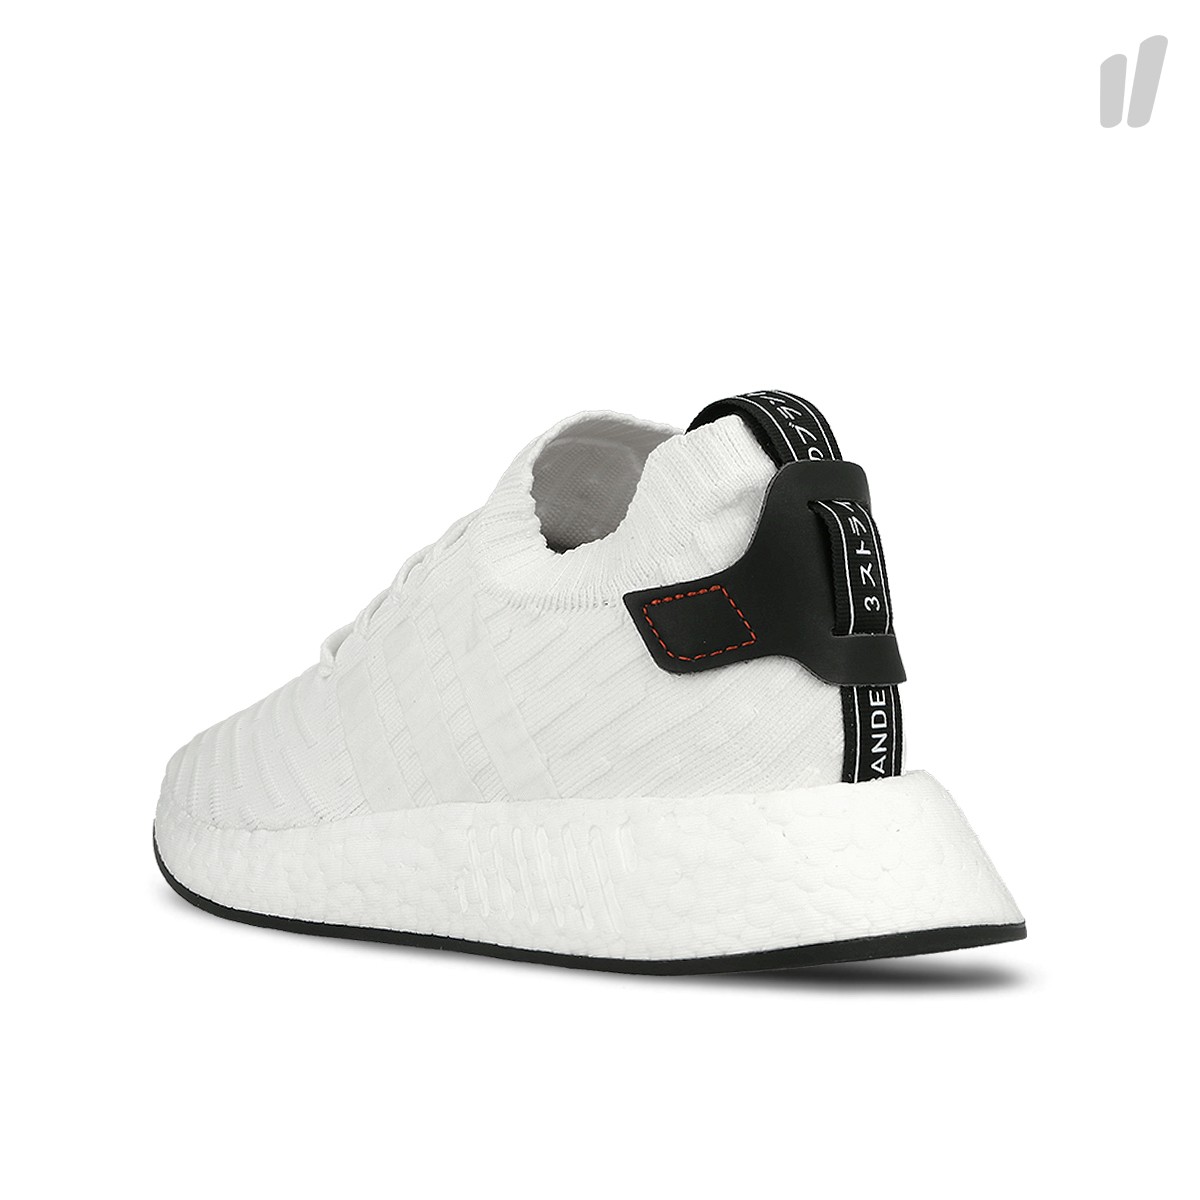 Adidas NMD_R2 Primeknit
Footwear White / Core Black